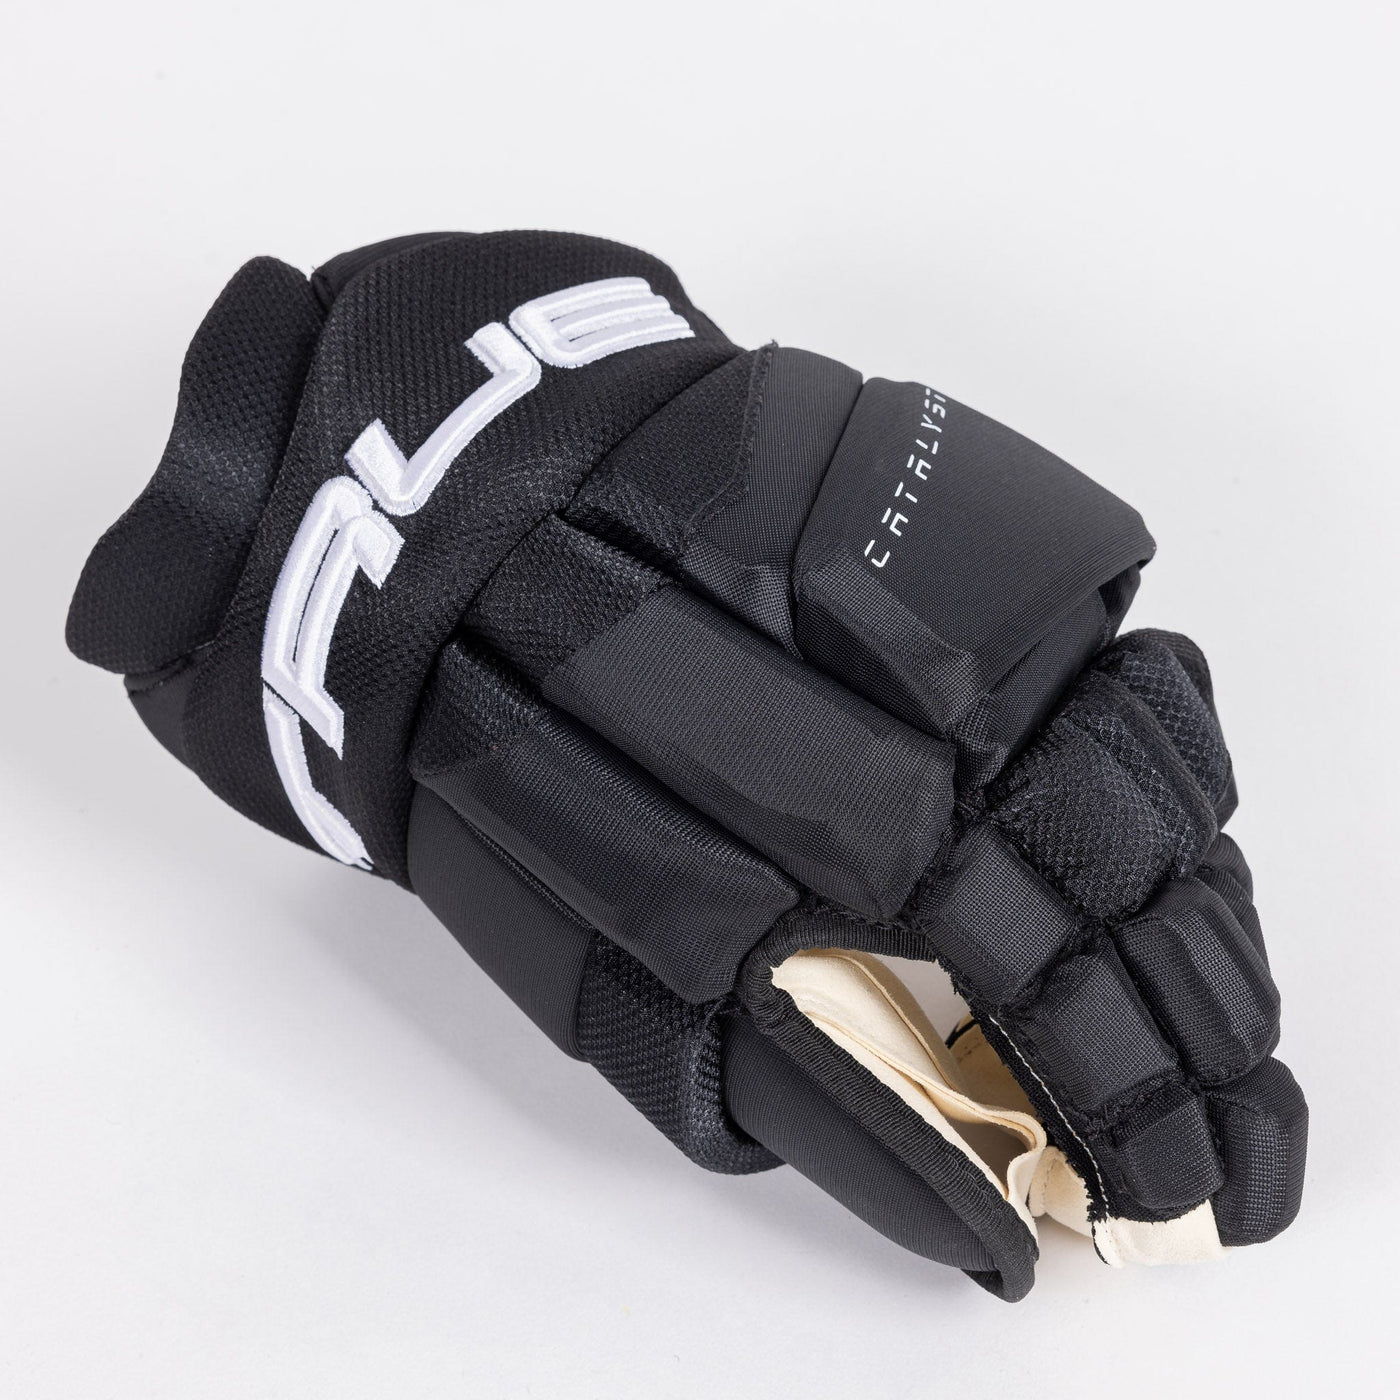 TRUE Catalyst Pro Stock Senior Hockey Glove - Vegas Away - The Hockey Shop Source For Sports